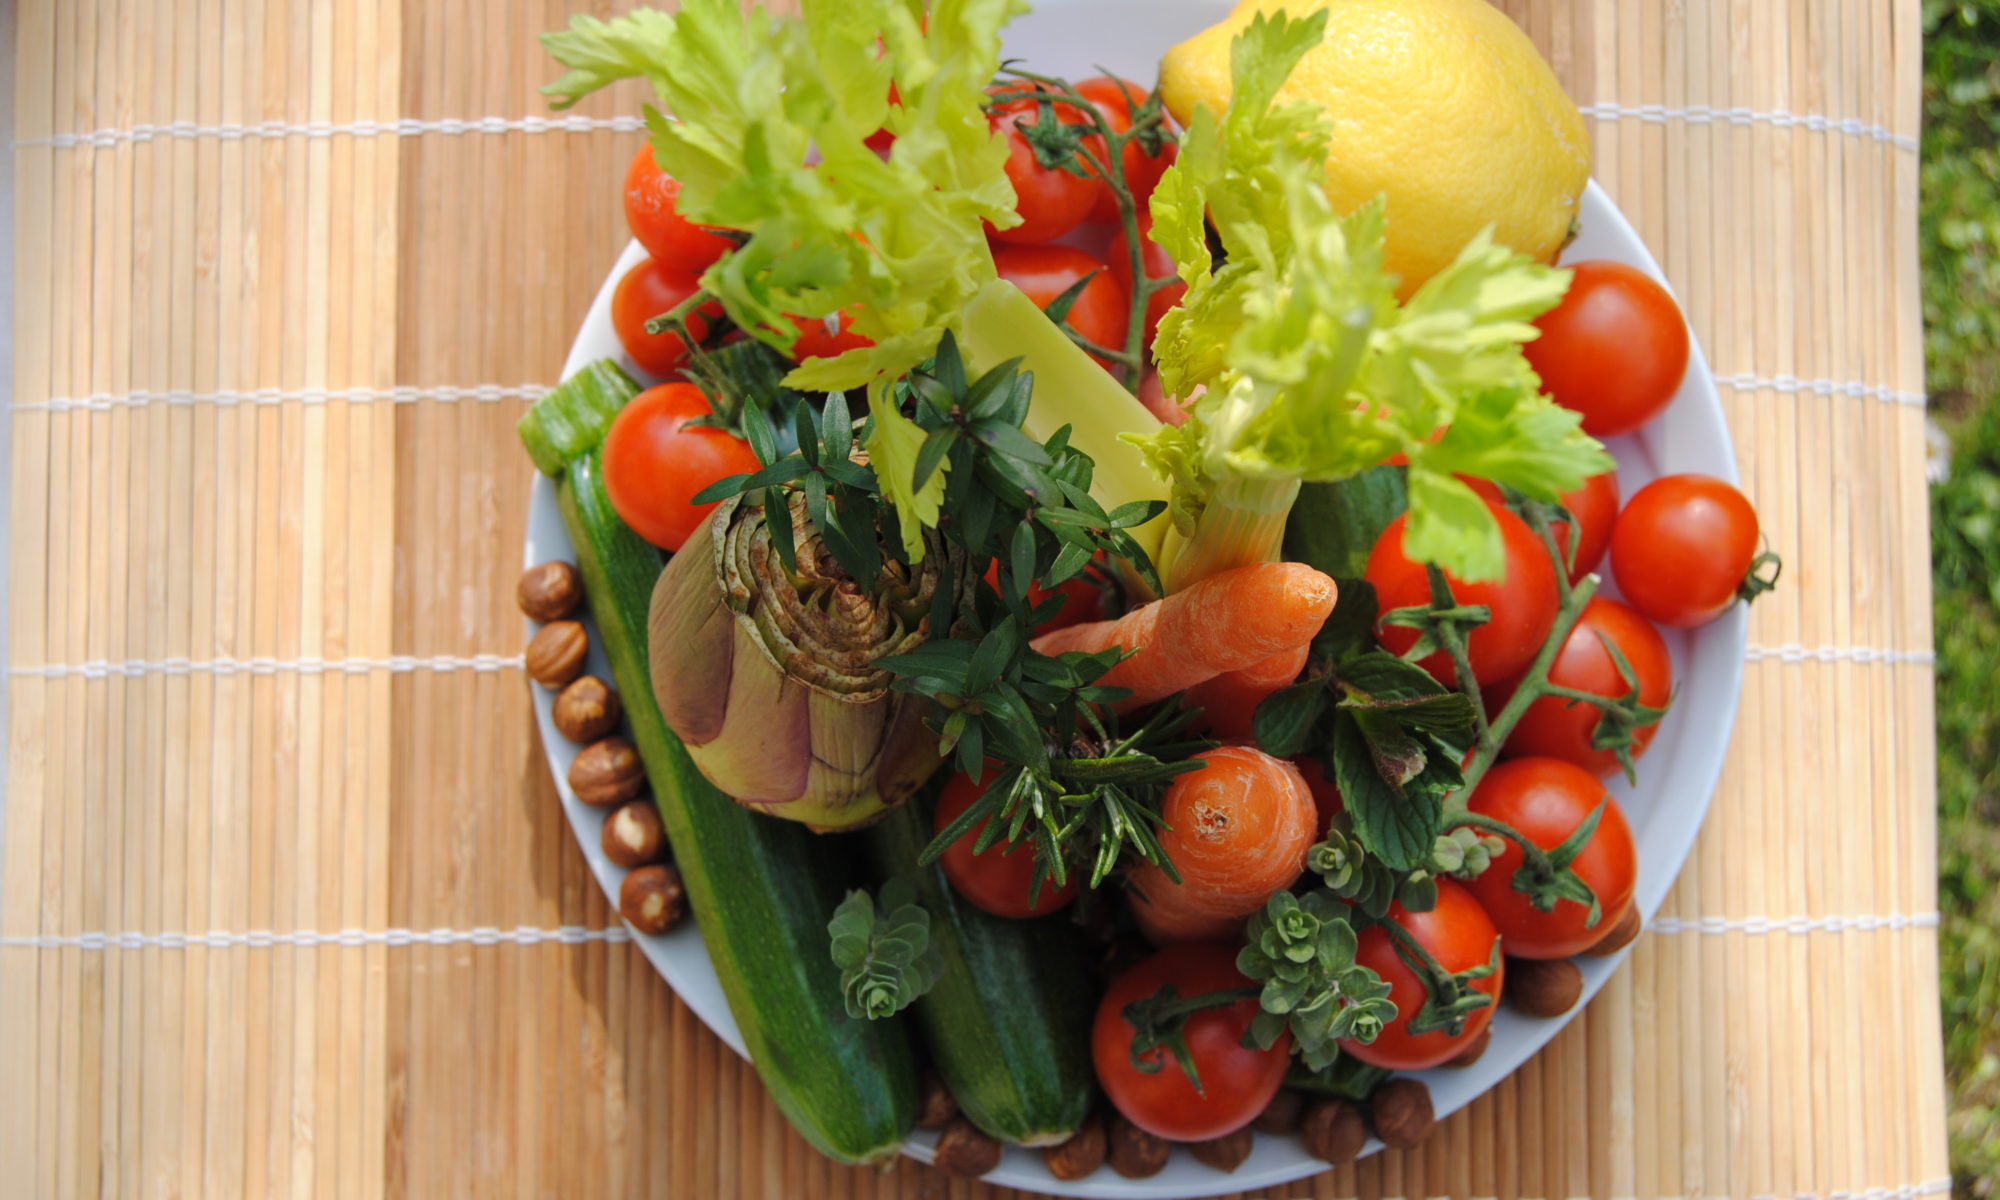 Verdura e frutta fonti naturali di antiossidanti necessari per contrastare i radicali liberi